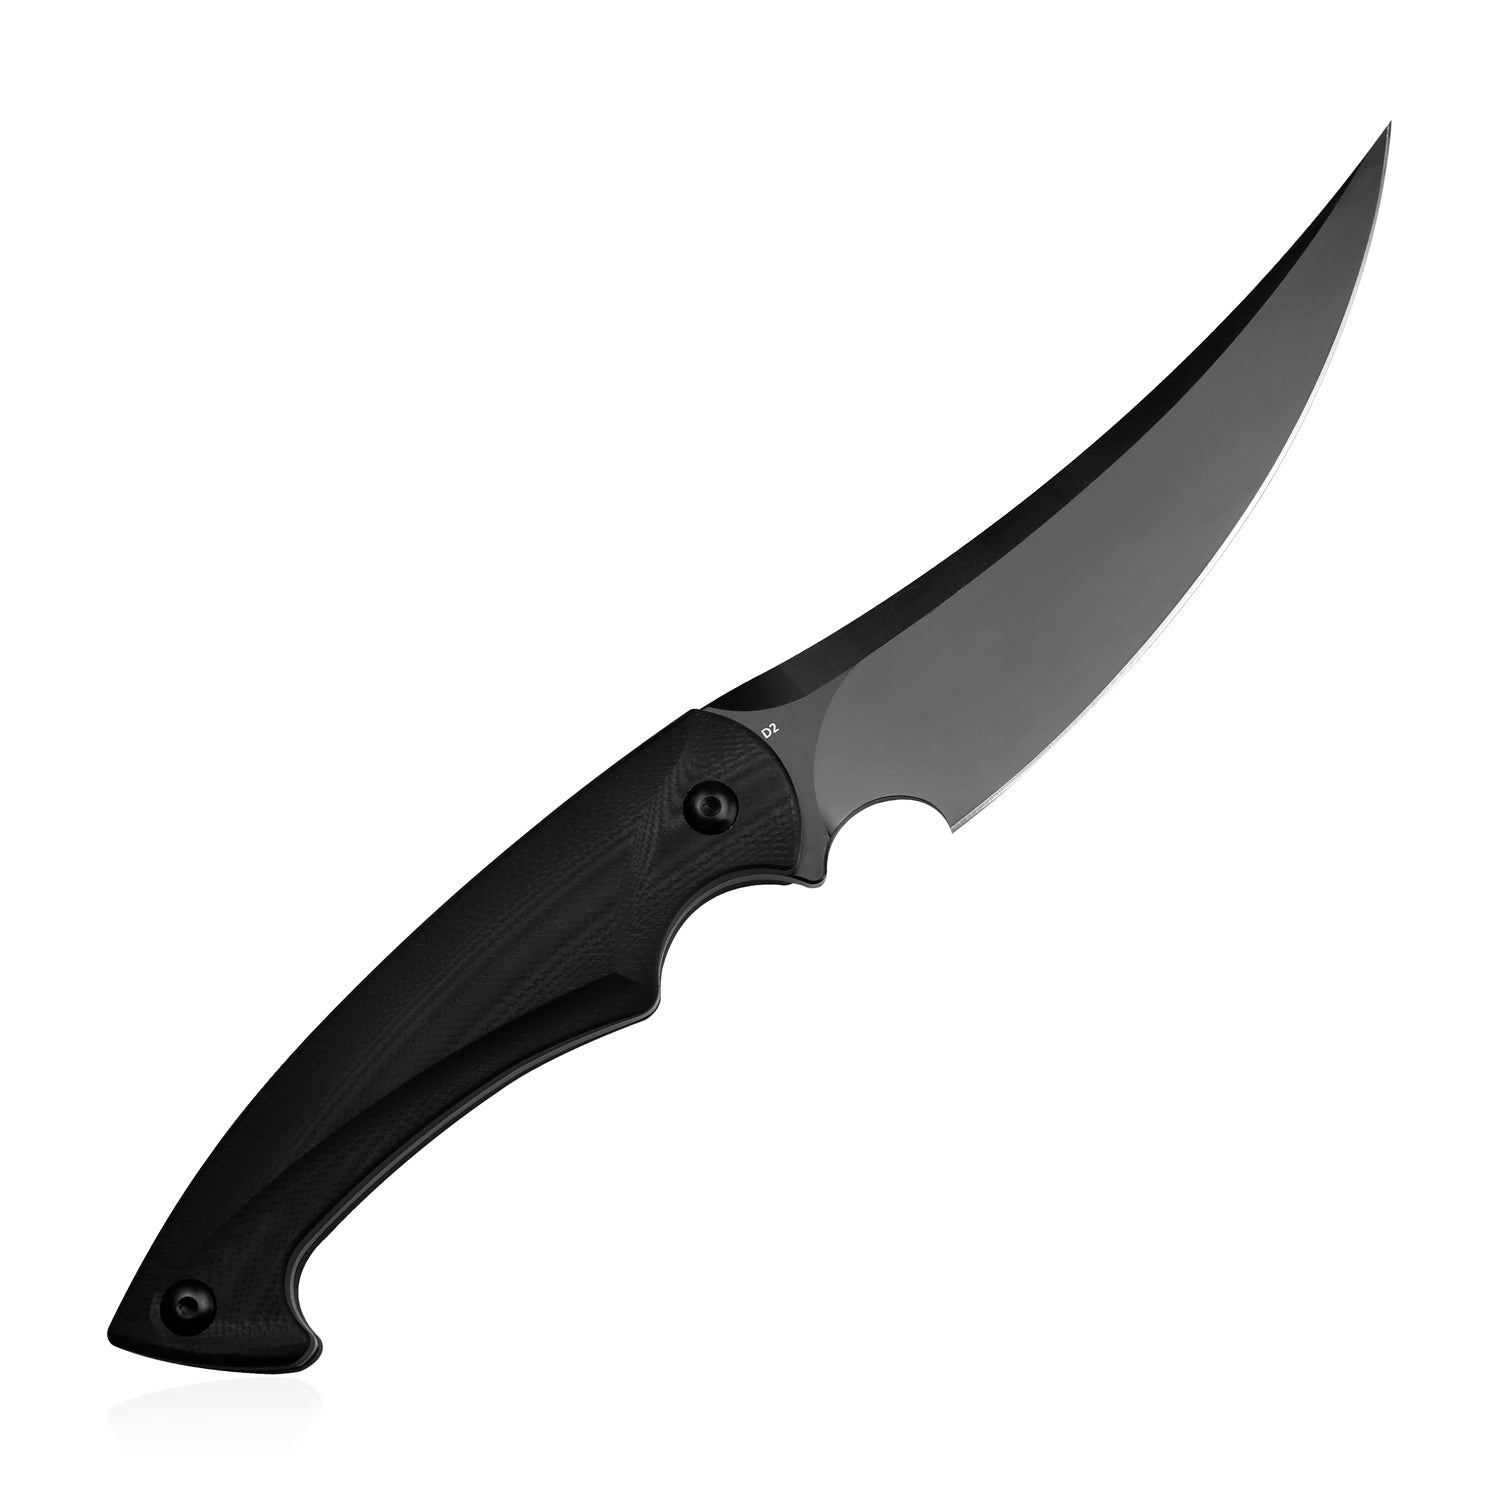 Kubey Scimitar Fixed Blade Hunting Knife G10 Handle 5.43" Black PVD Coating D2 KU231B